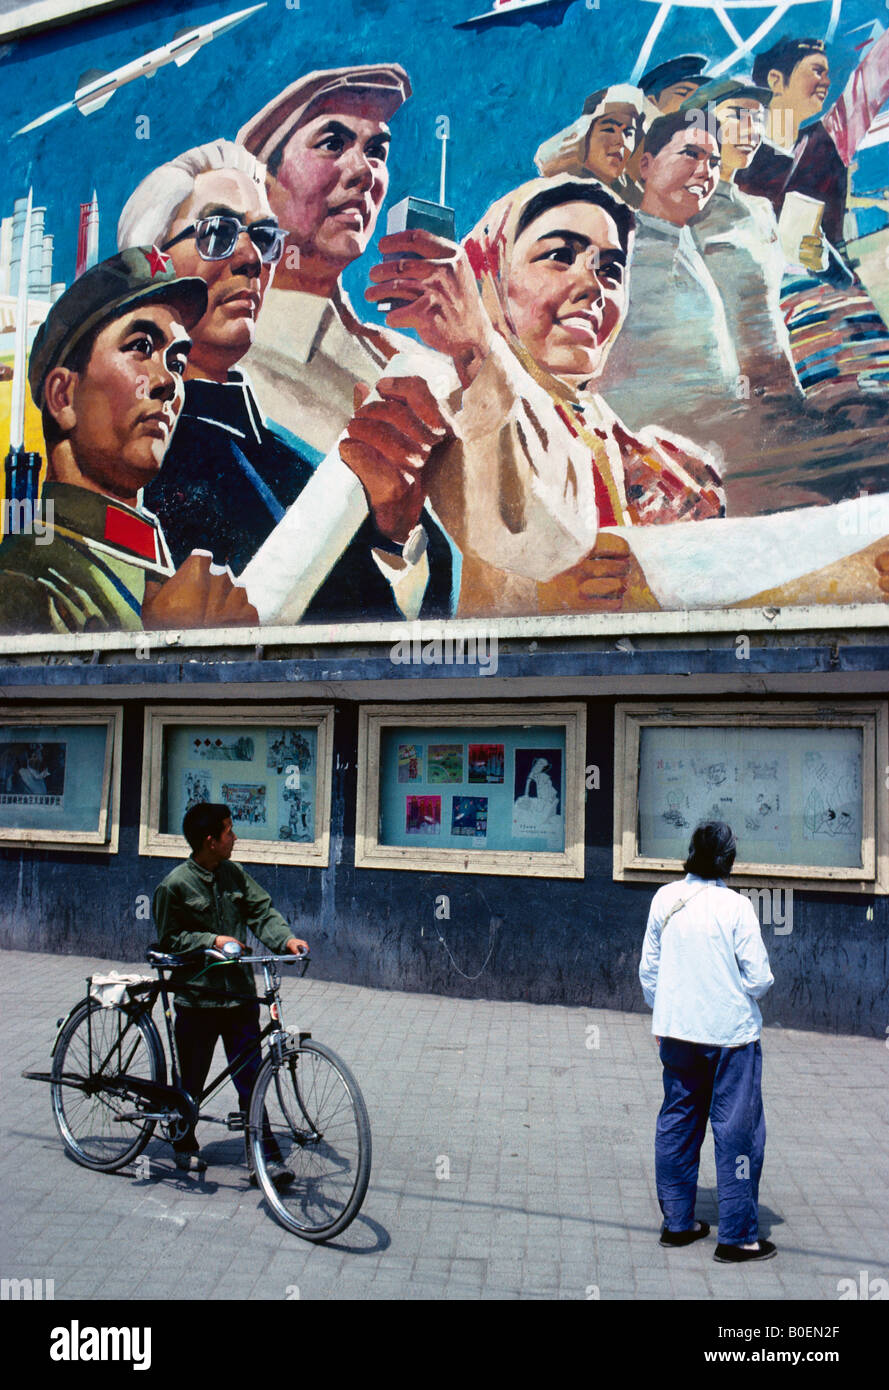 1979 billboard in downtown Chengdu Sichuan Province in socialist realist style promoting the Four Modernizations program Stock Photo